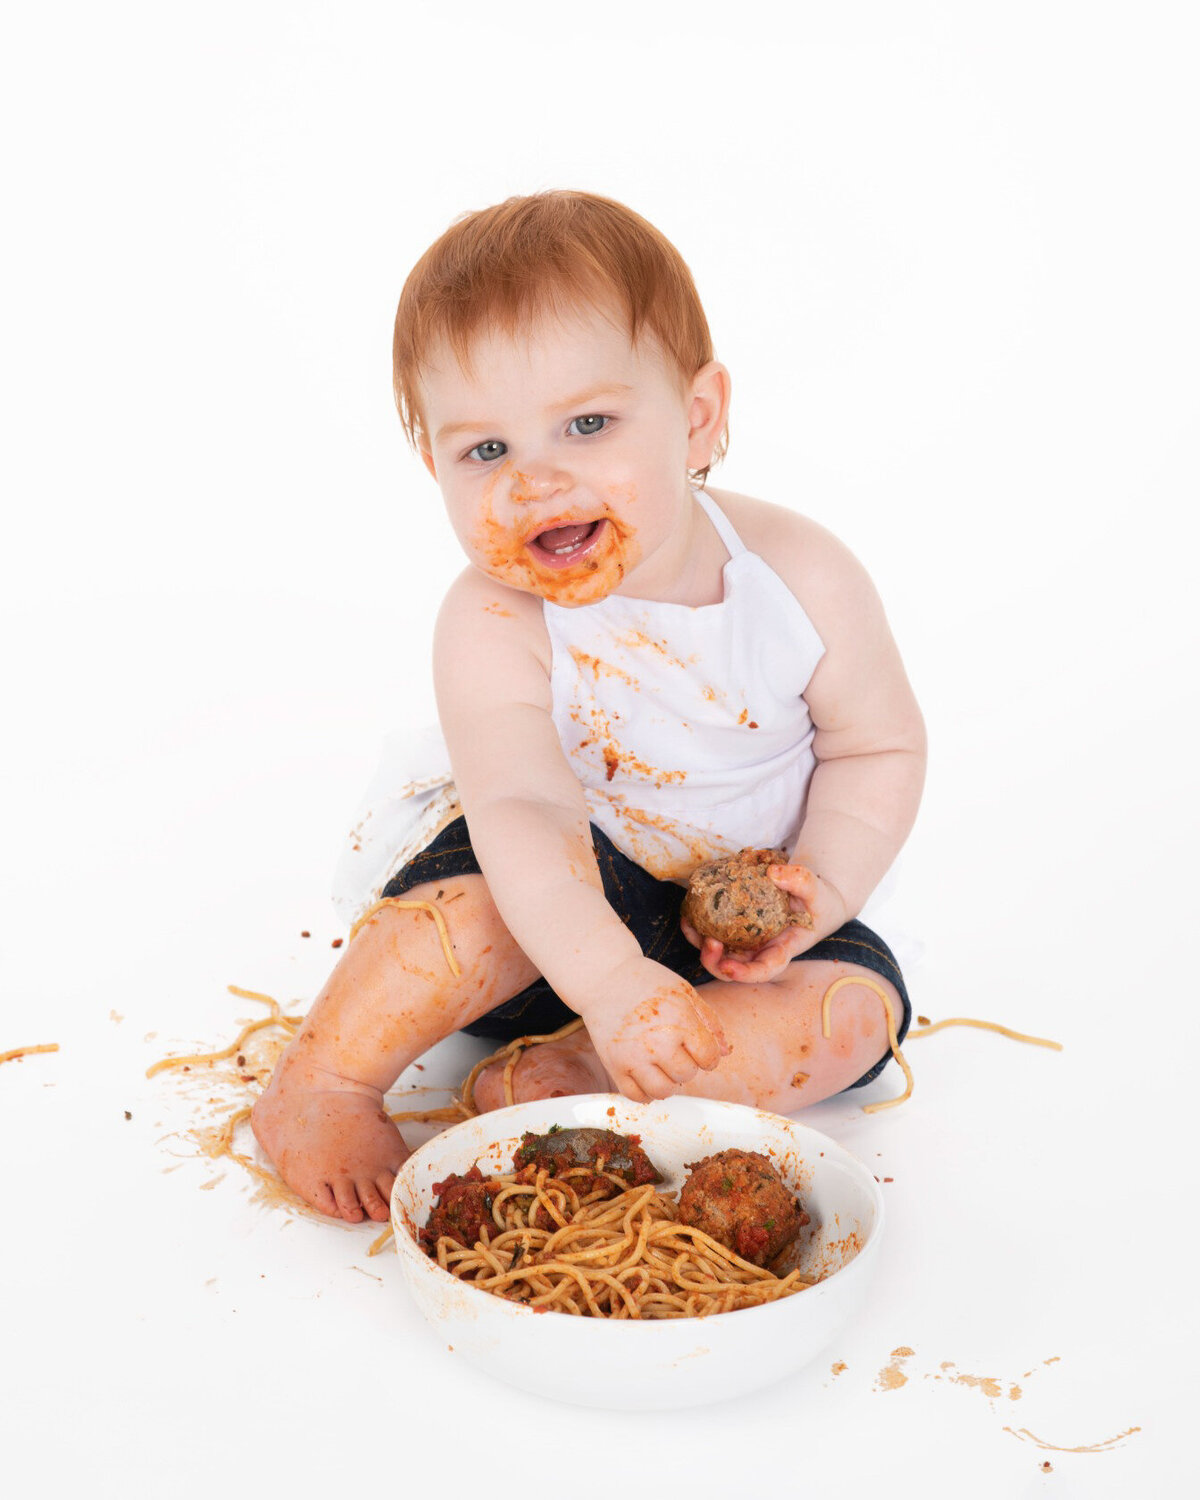 Spaghetti and meatballs baby cake smash photoshoot in Houston